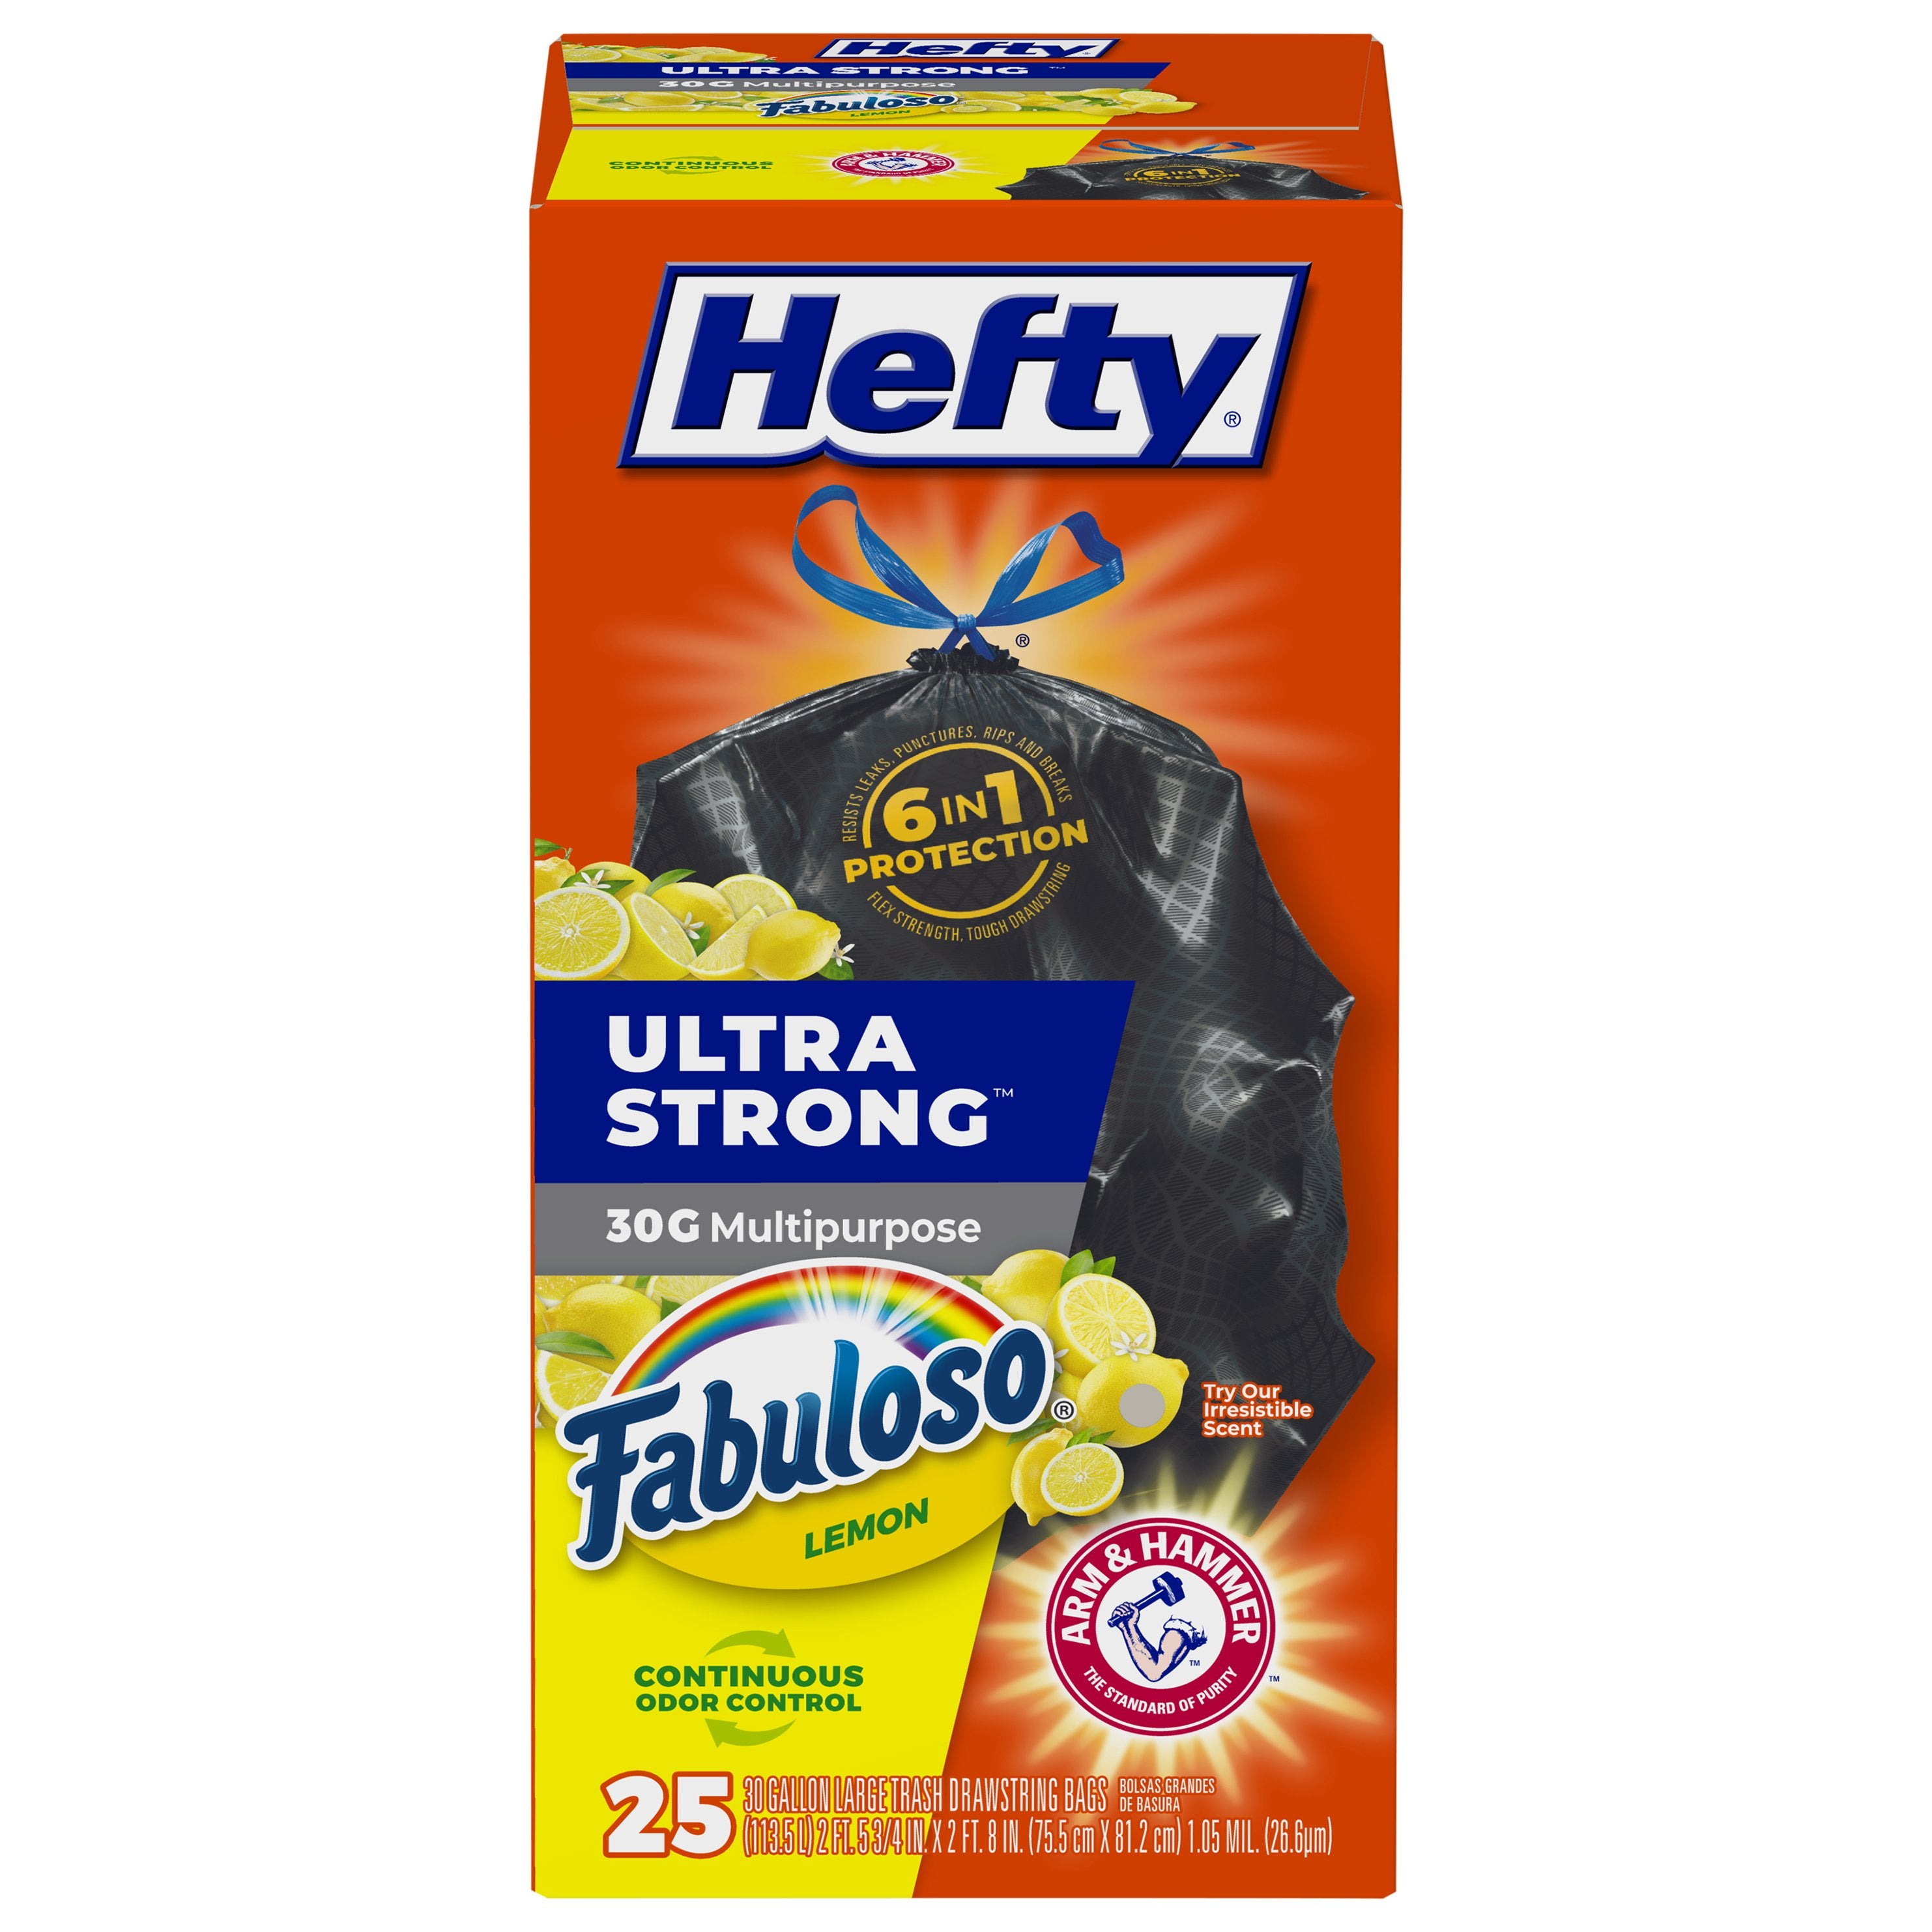 Hefty Baggies Storage Bag - 75 CT 9 Pack – StockUpExpress